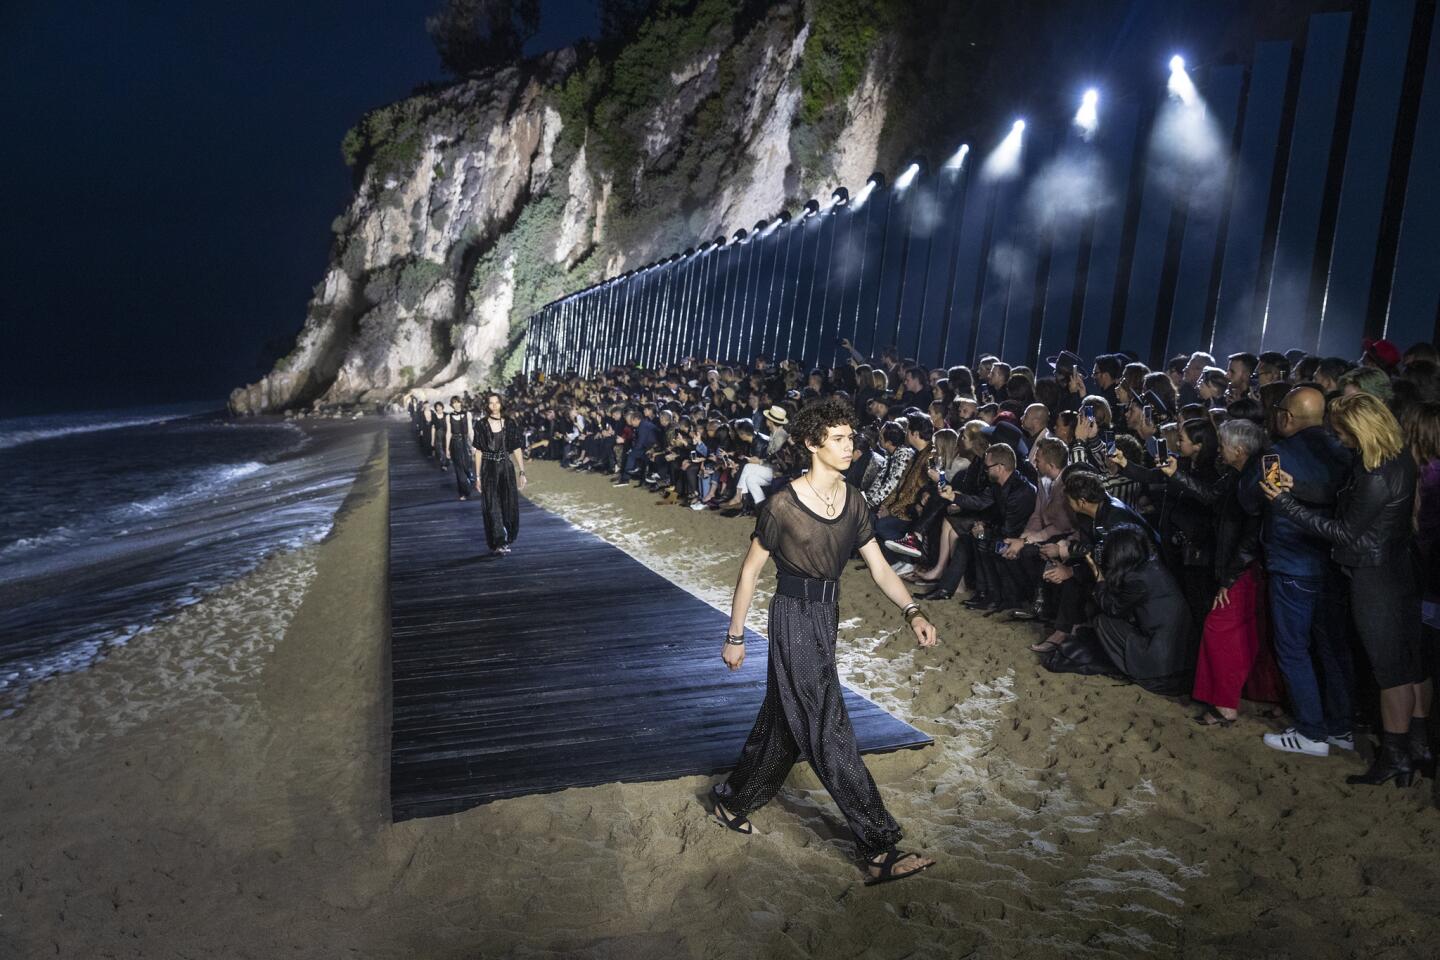 The Saint Laurent spring/summer 2020 menswear runway show on the beach in Malibu.